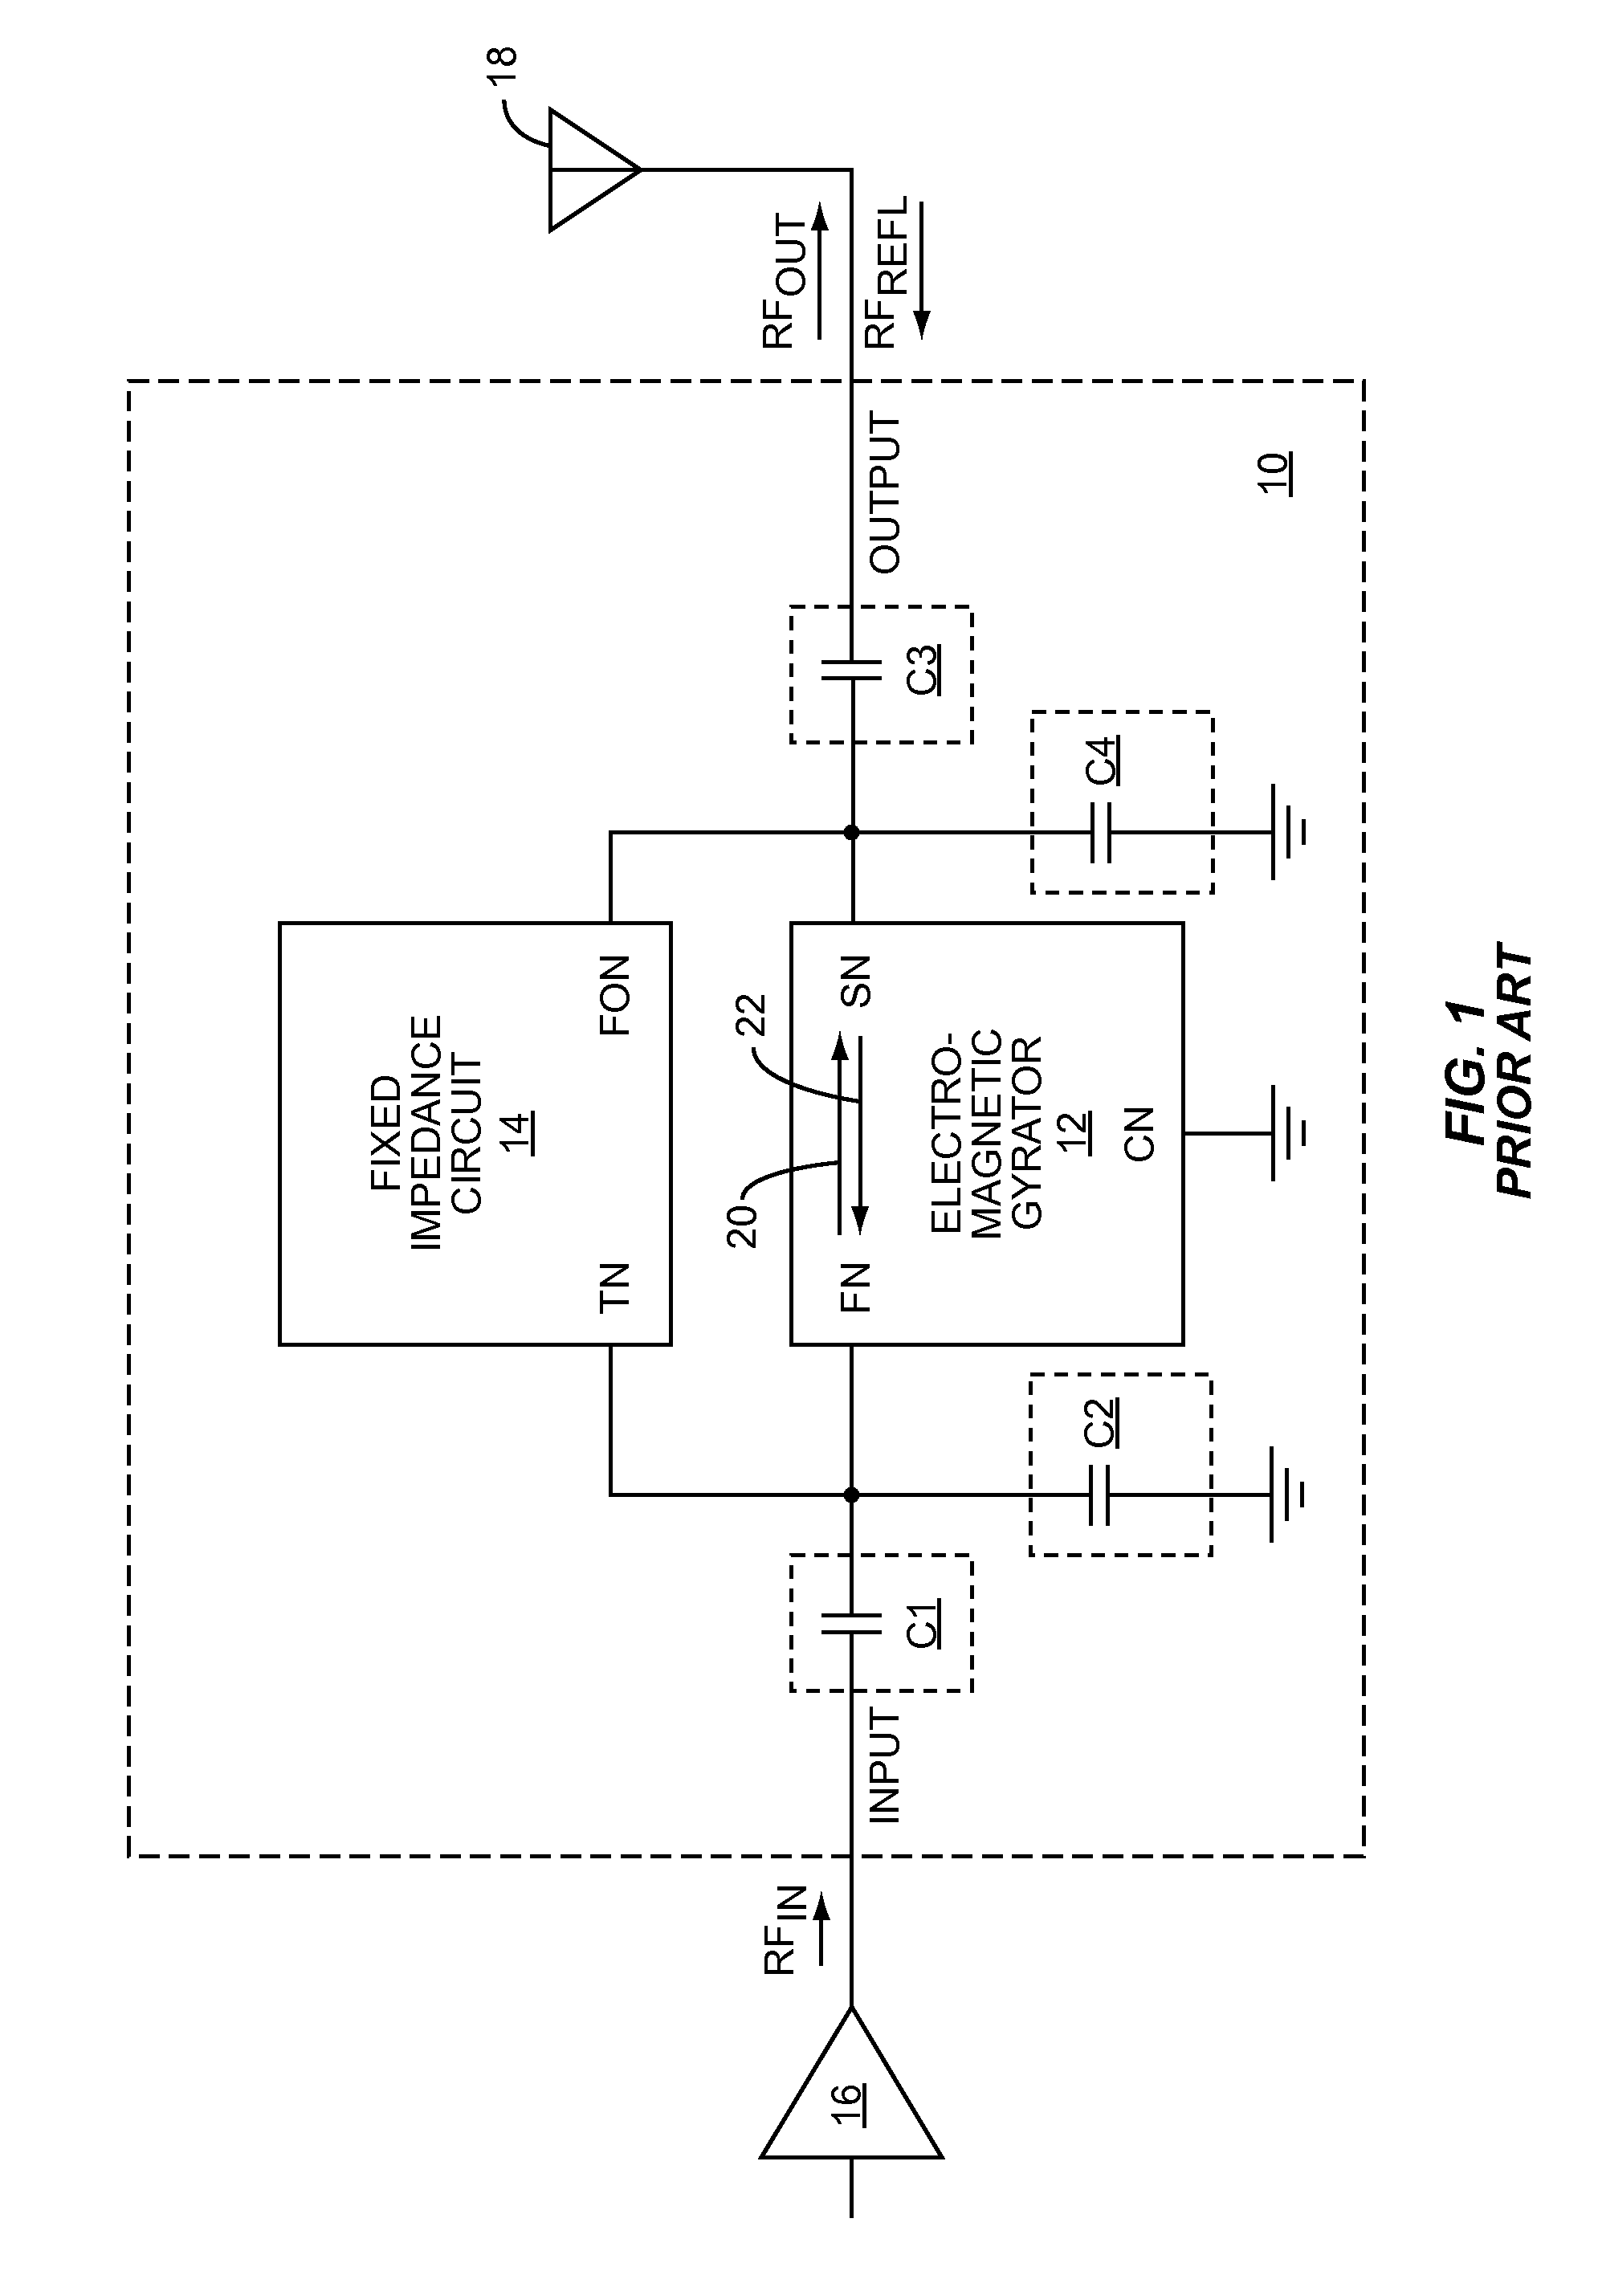 Frequency-adjustable radio frequency isolator circuitry